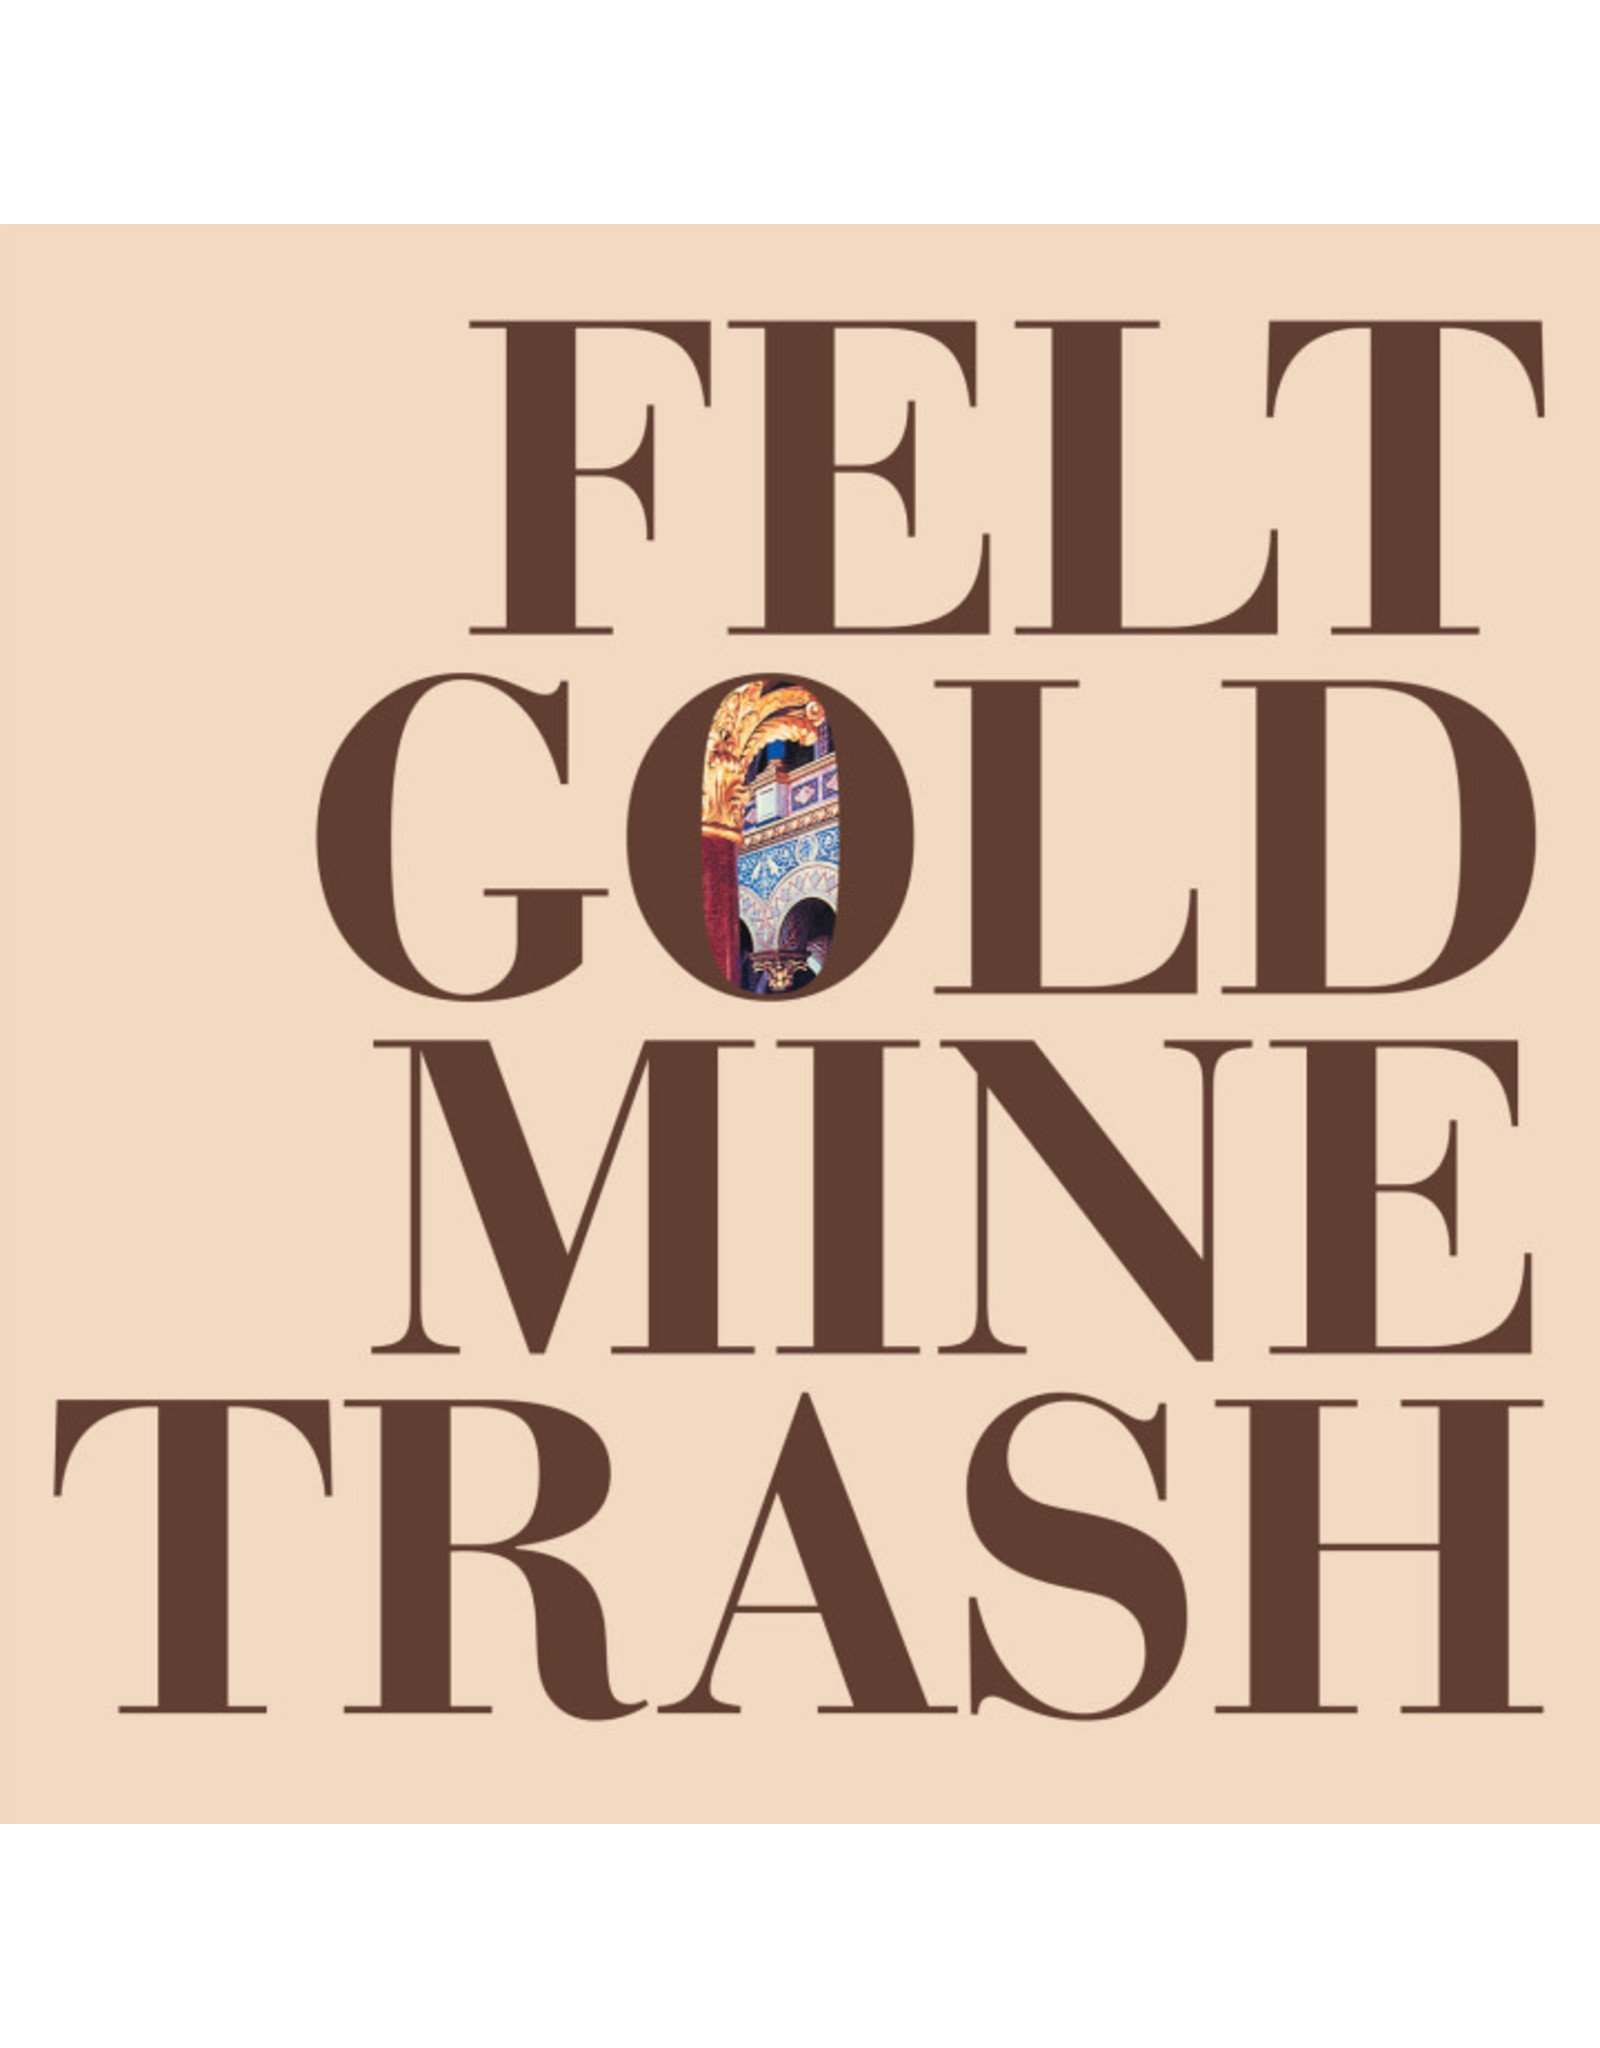 1972 Felt: Gold Mine Trash LP